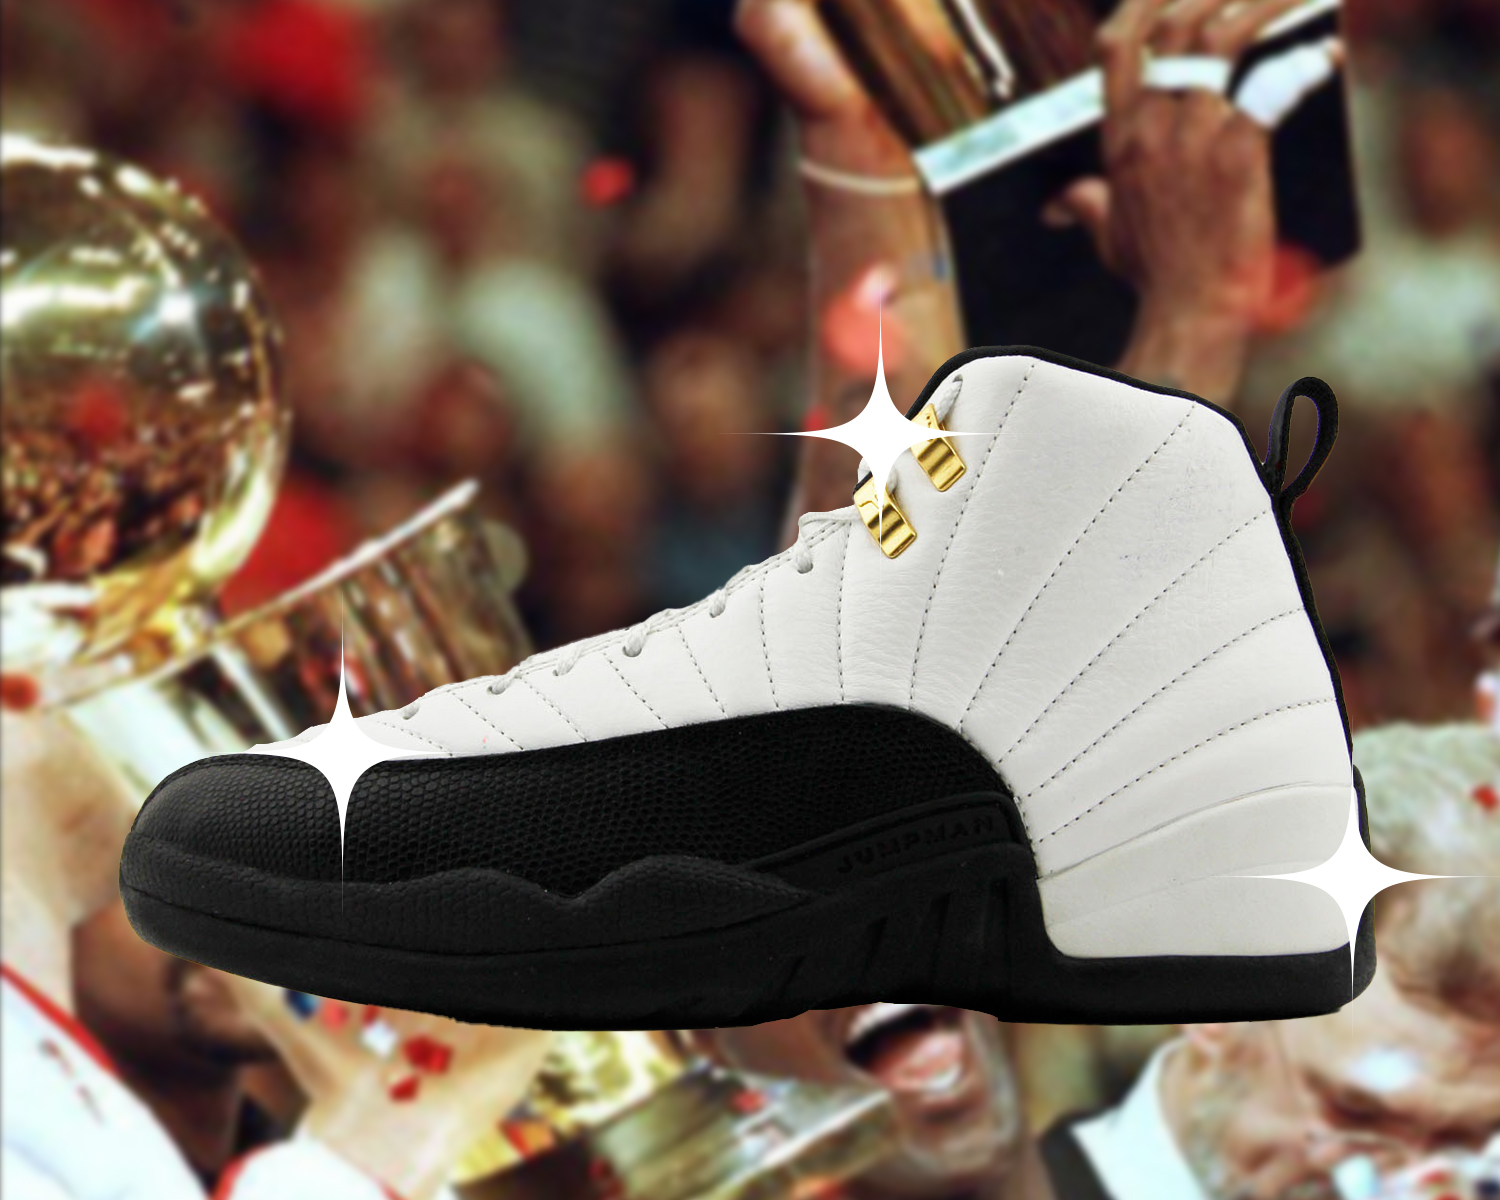 What Pros Wear: Michael Jordan's Air Jordan 3 Shoes - What Pros Wear